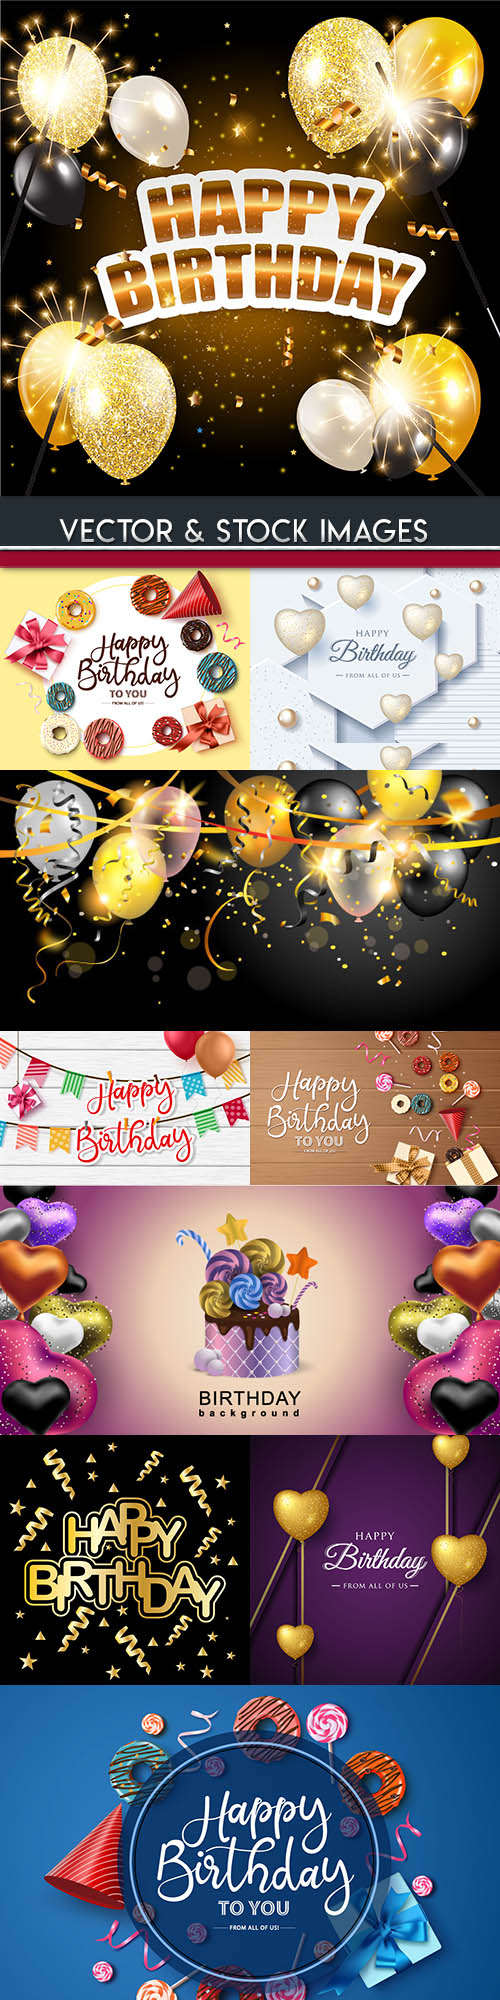 Happy birthday holiday invitation balloons and gifts 18